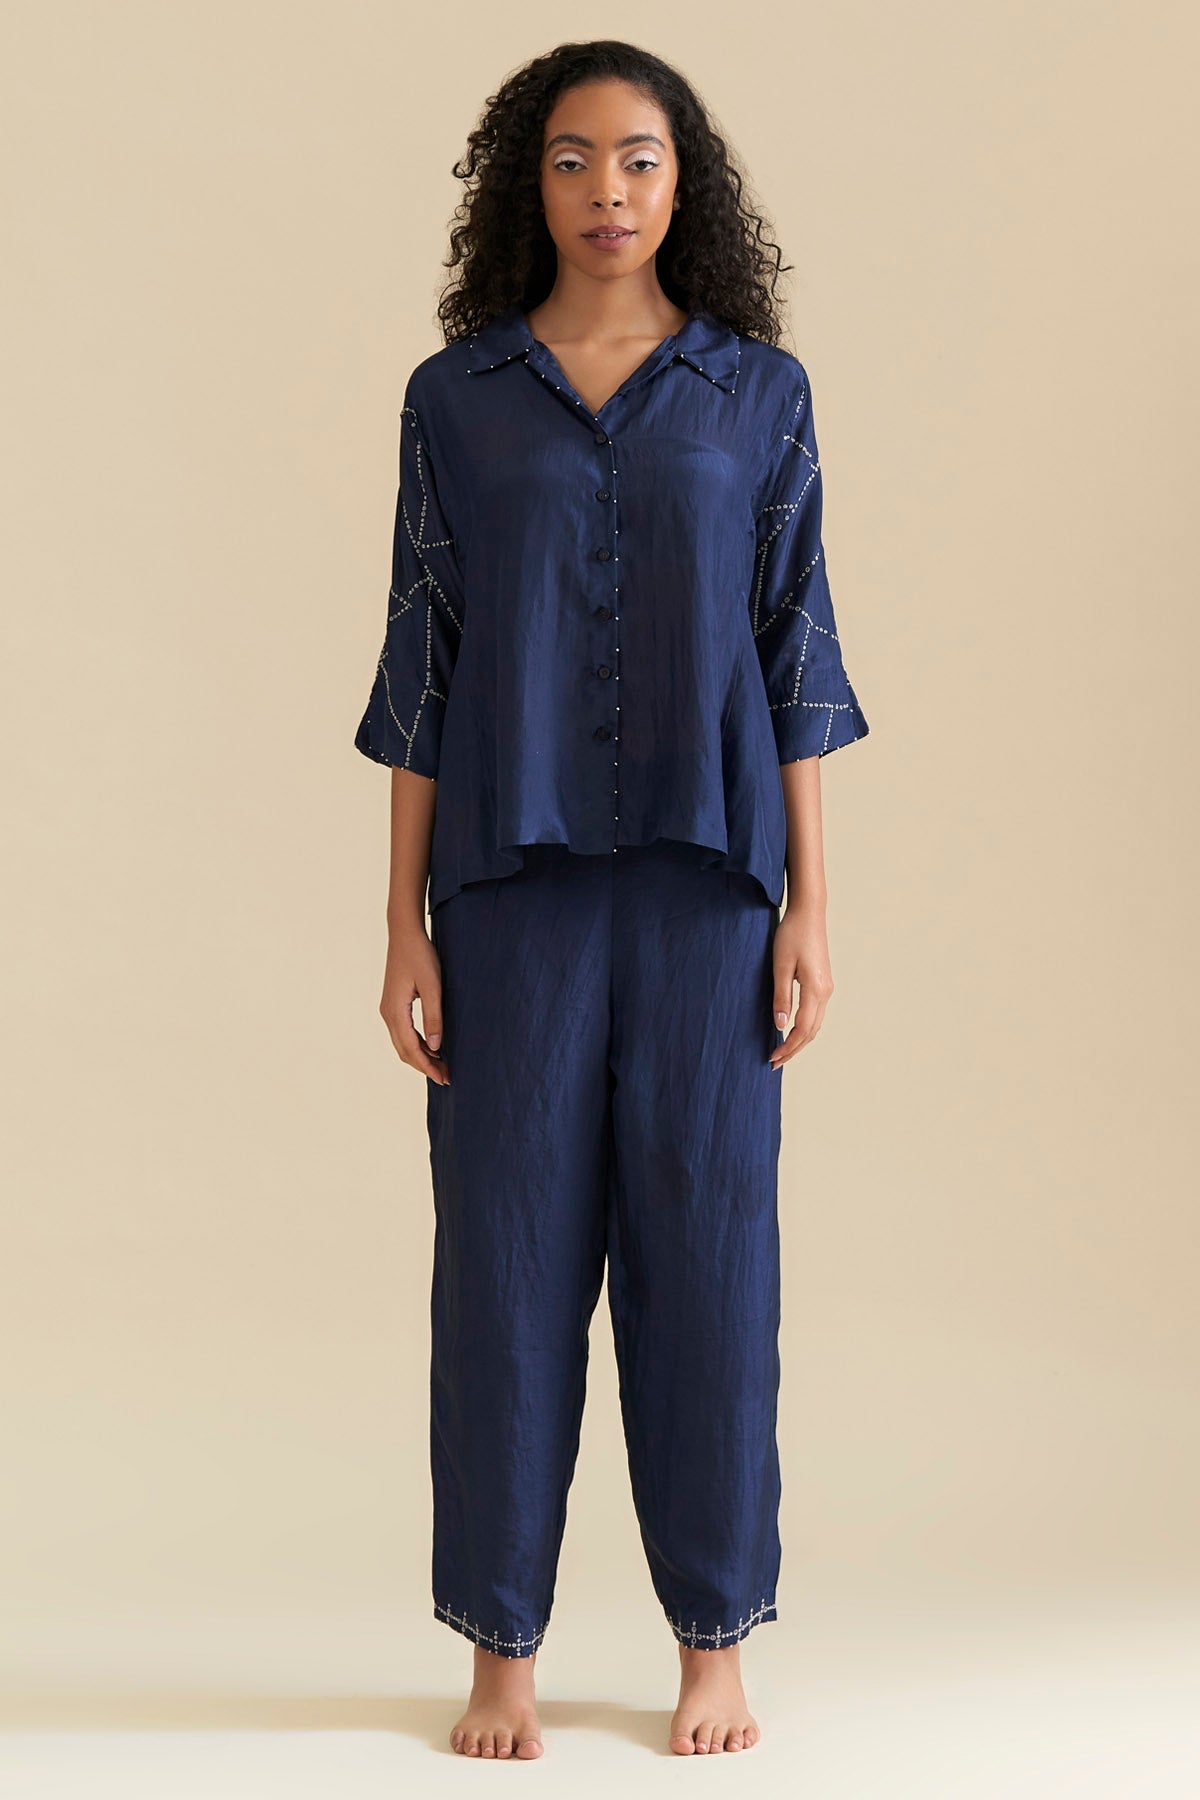 Srota by Srishti Aggarwal Embroidered Habutai Silk Shirt for women online at ScrollnShops